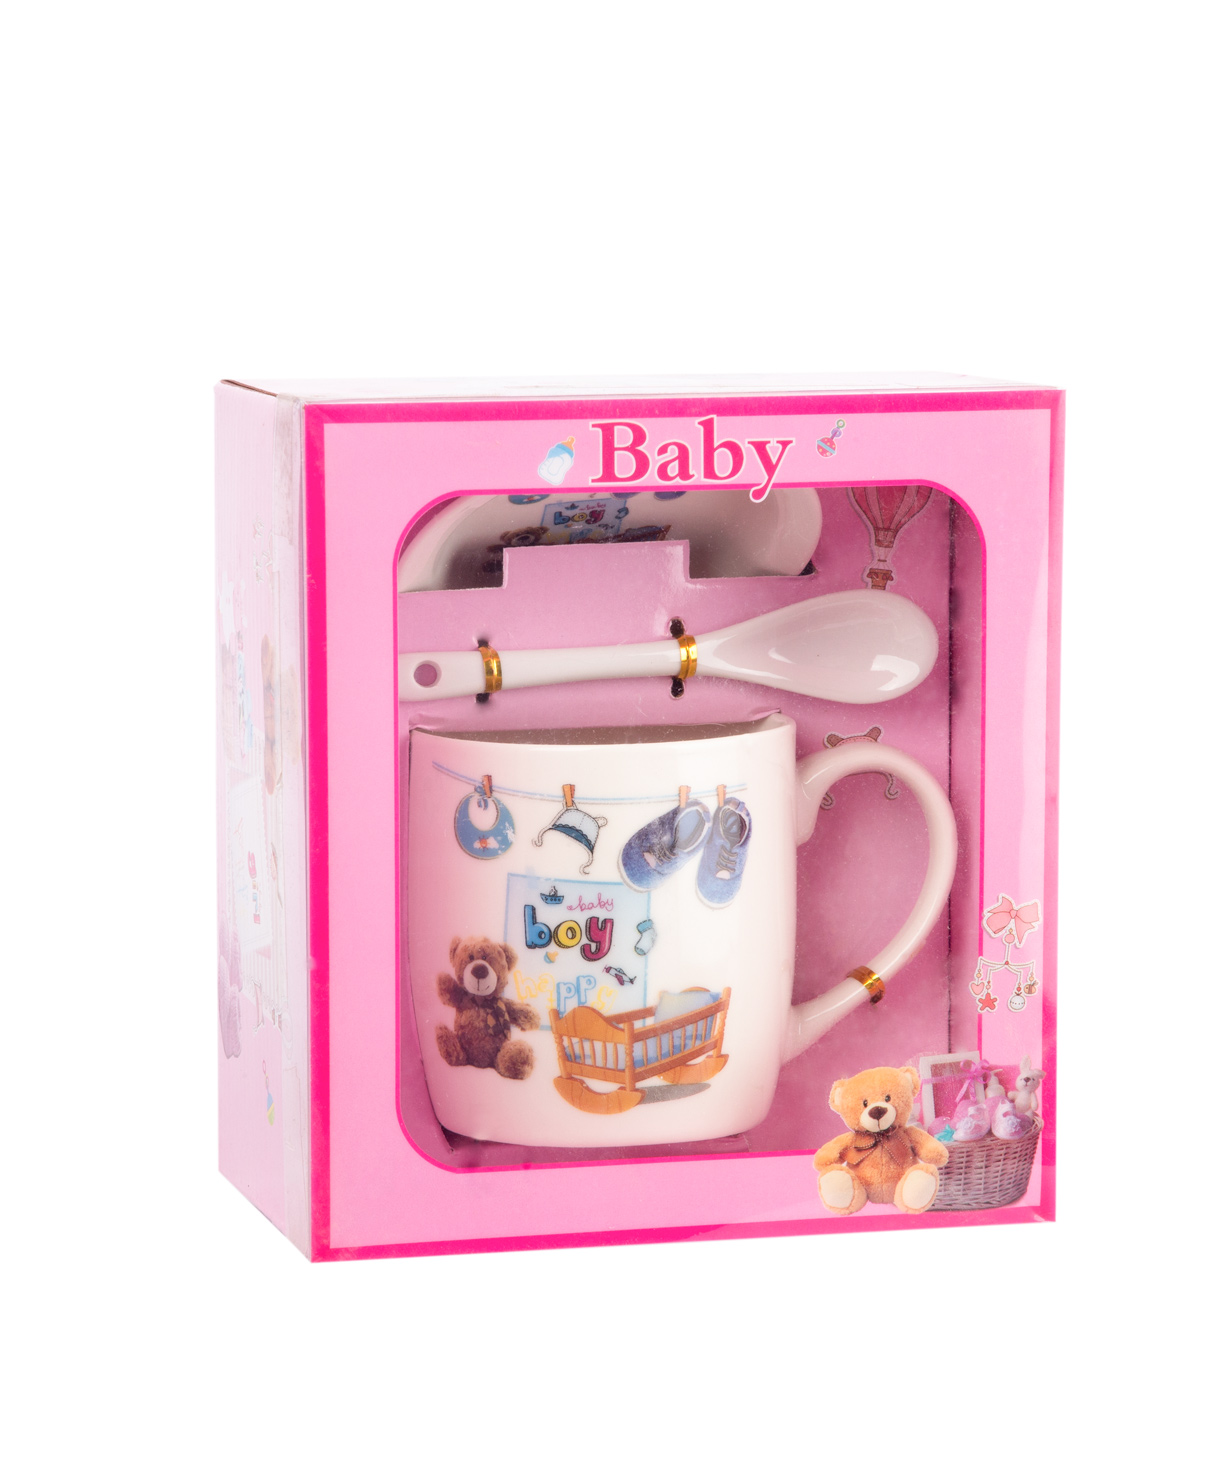 Cup `Baby` 350 ml ceramic